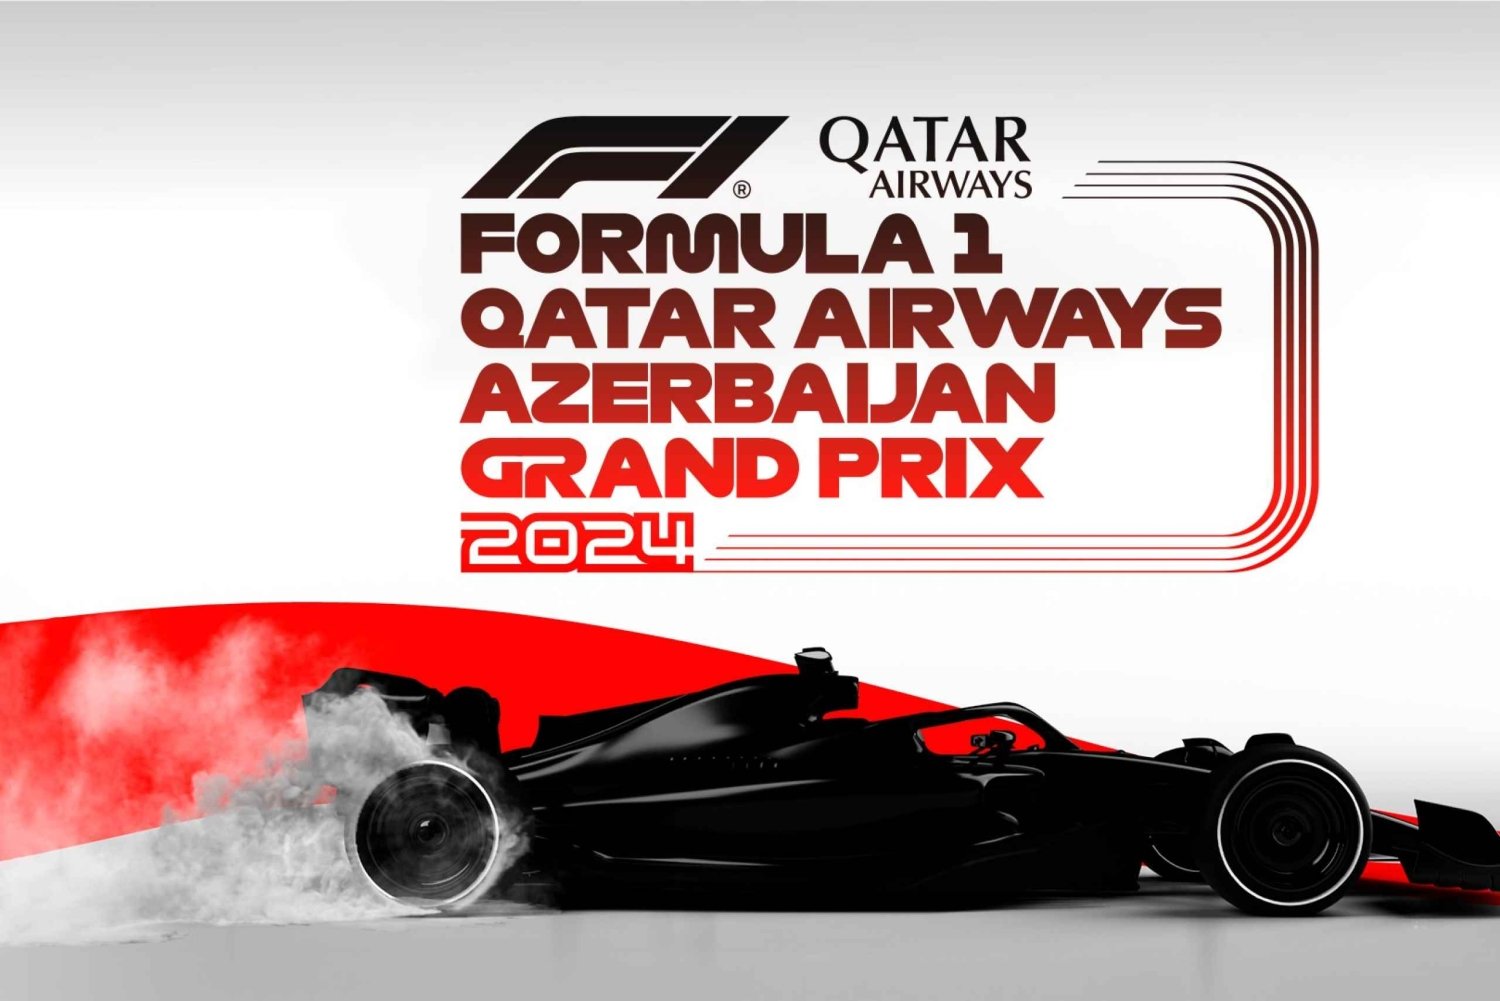 Formula 1 Grand Prix in Baku 5 Days Tour